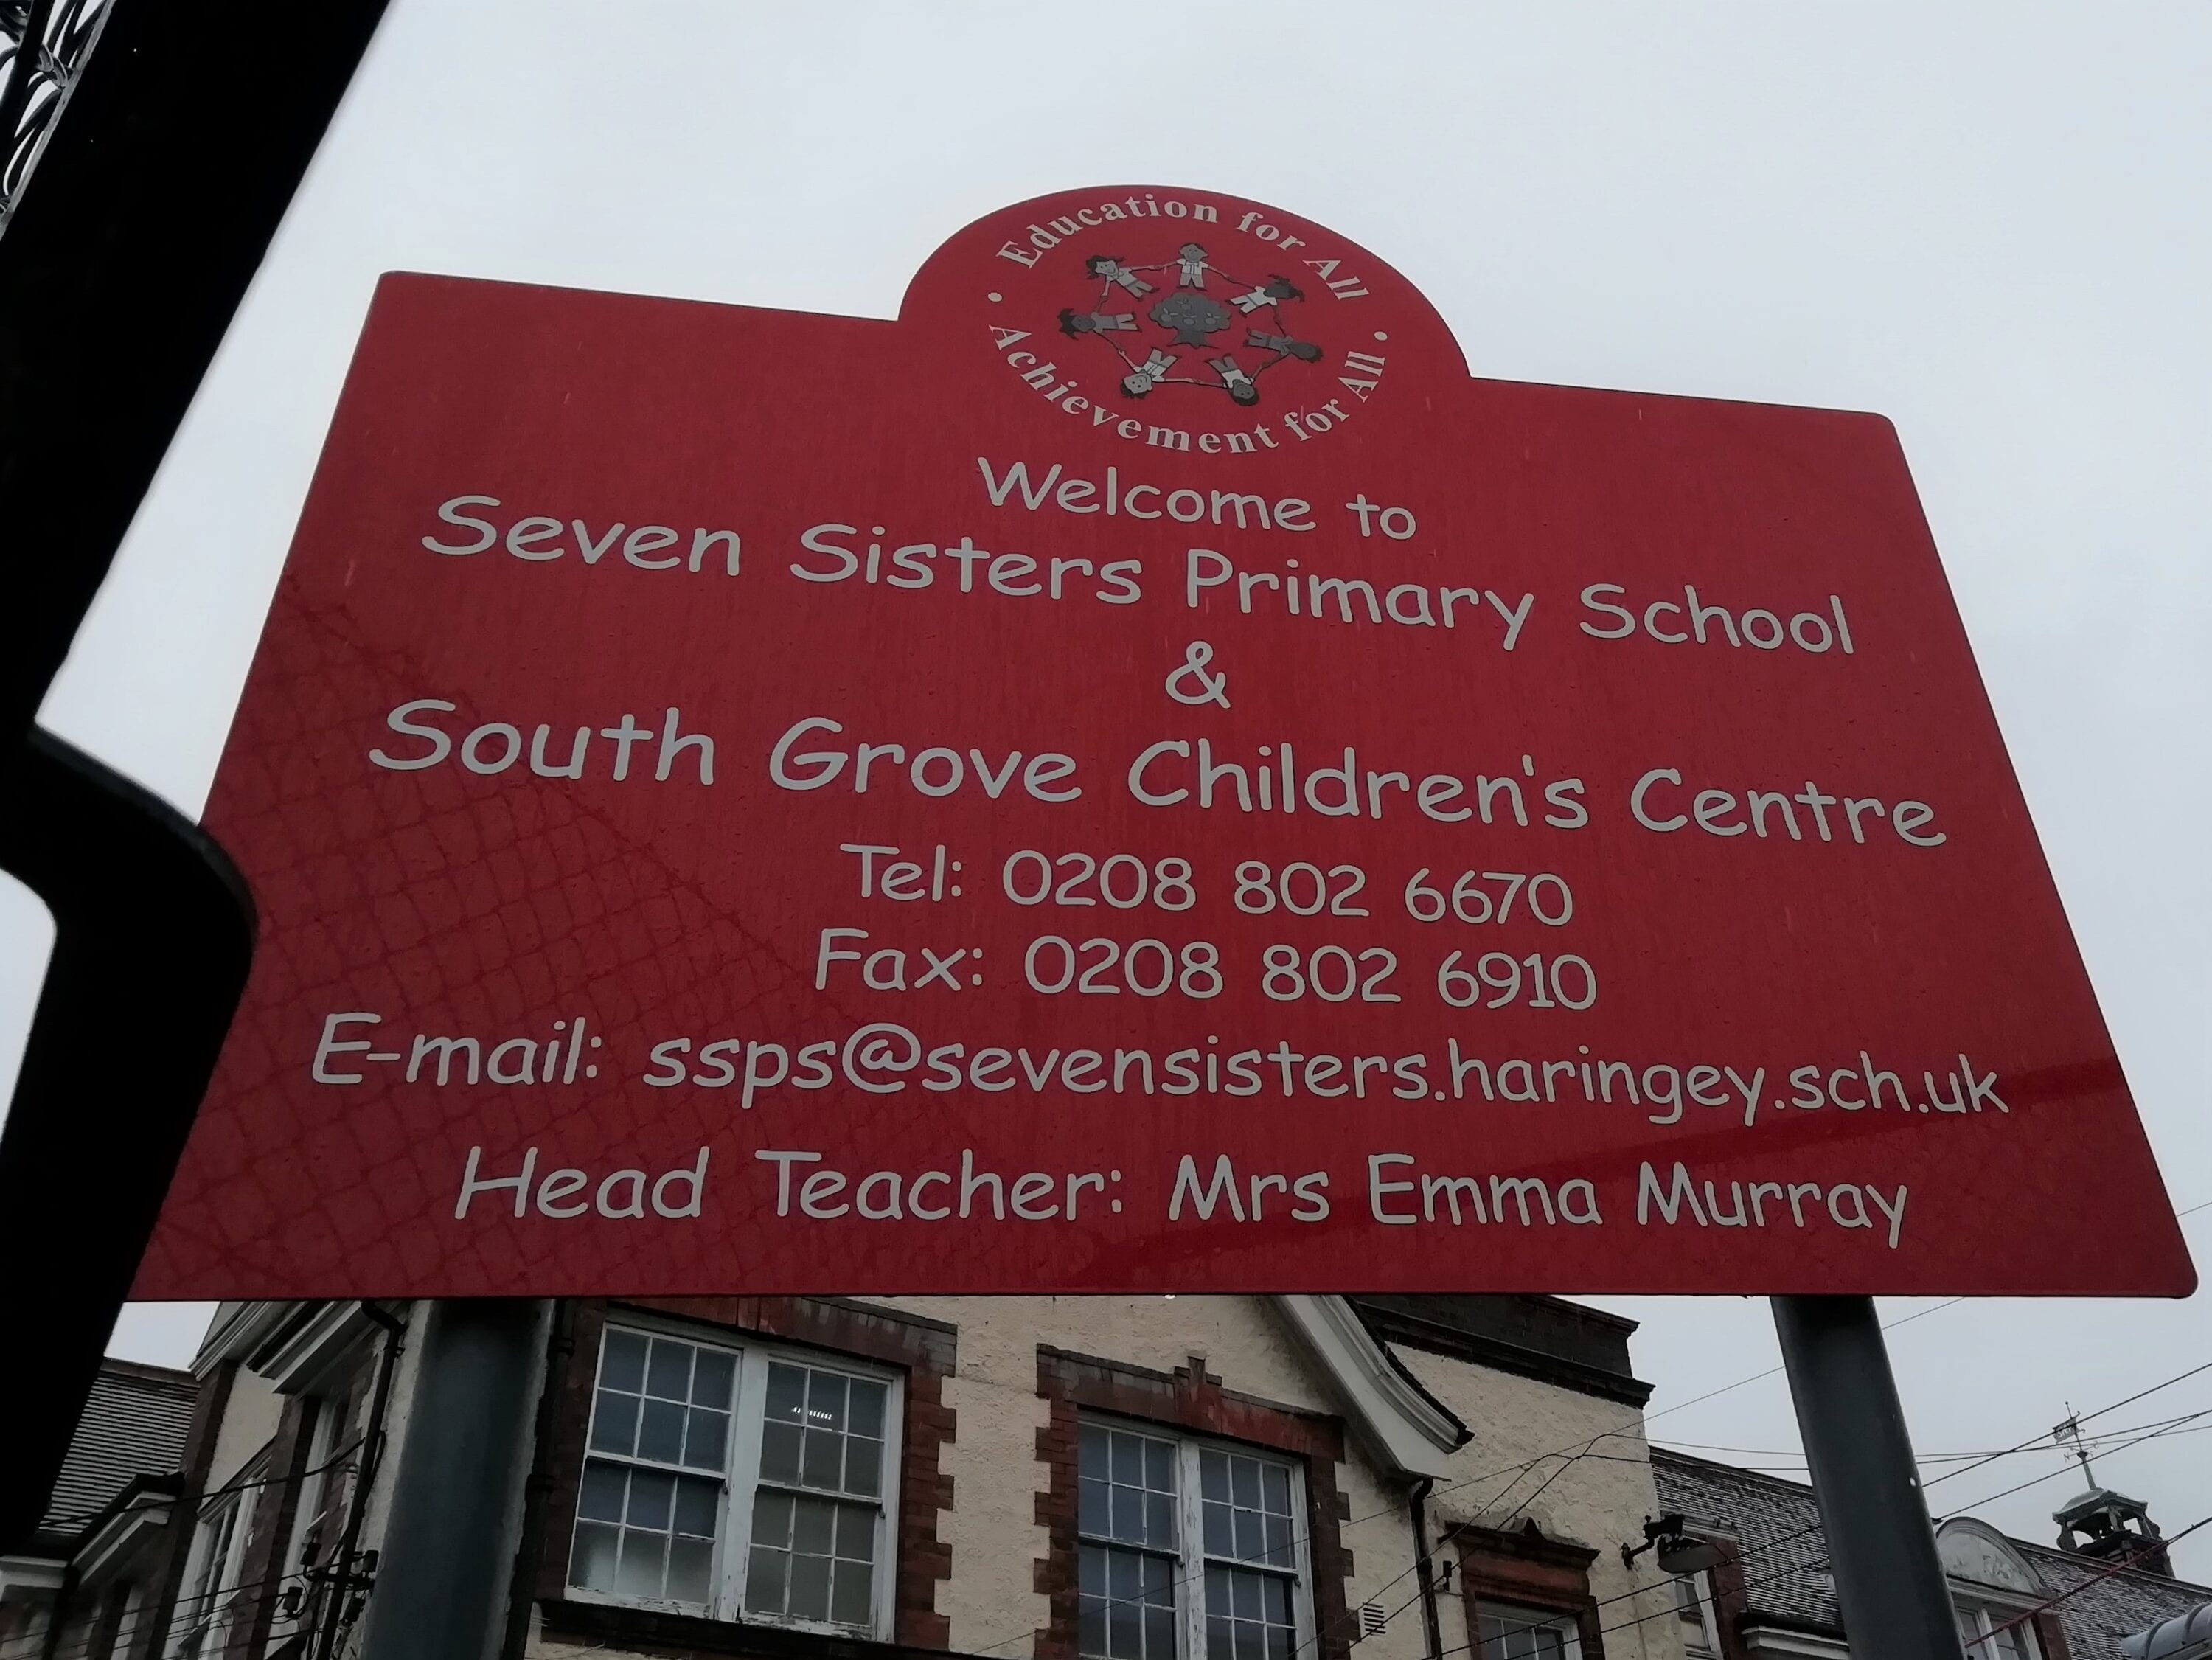 Fire Escape Inspection, Seven Sisters Primary School, Tottenham, London N15 1